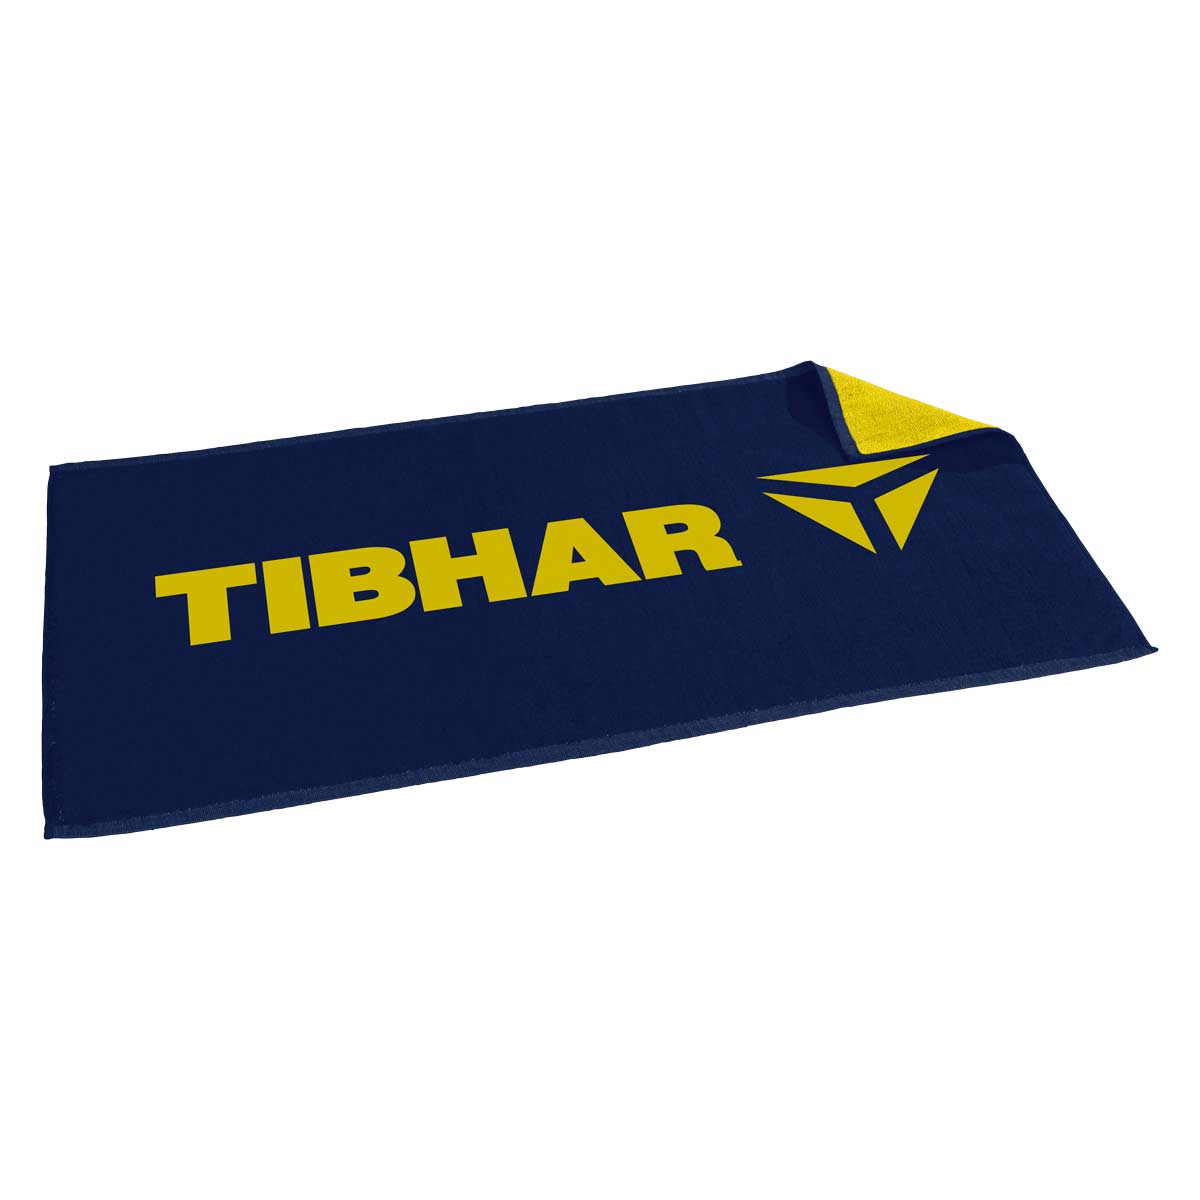 TIBHAR Towel T marine/yellow